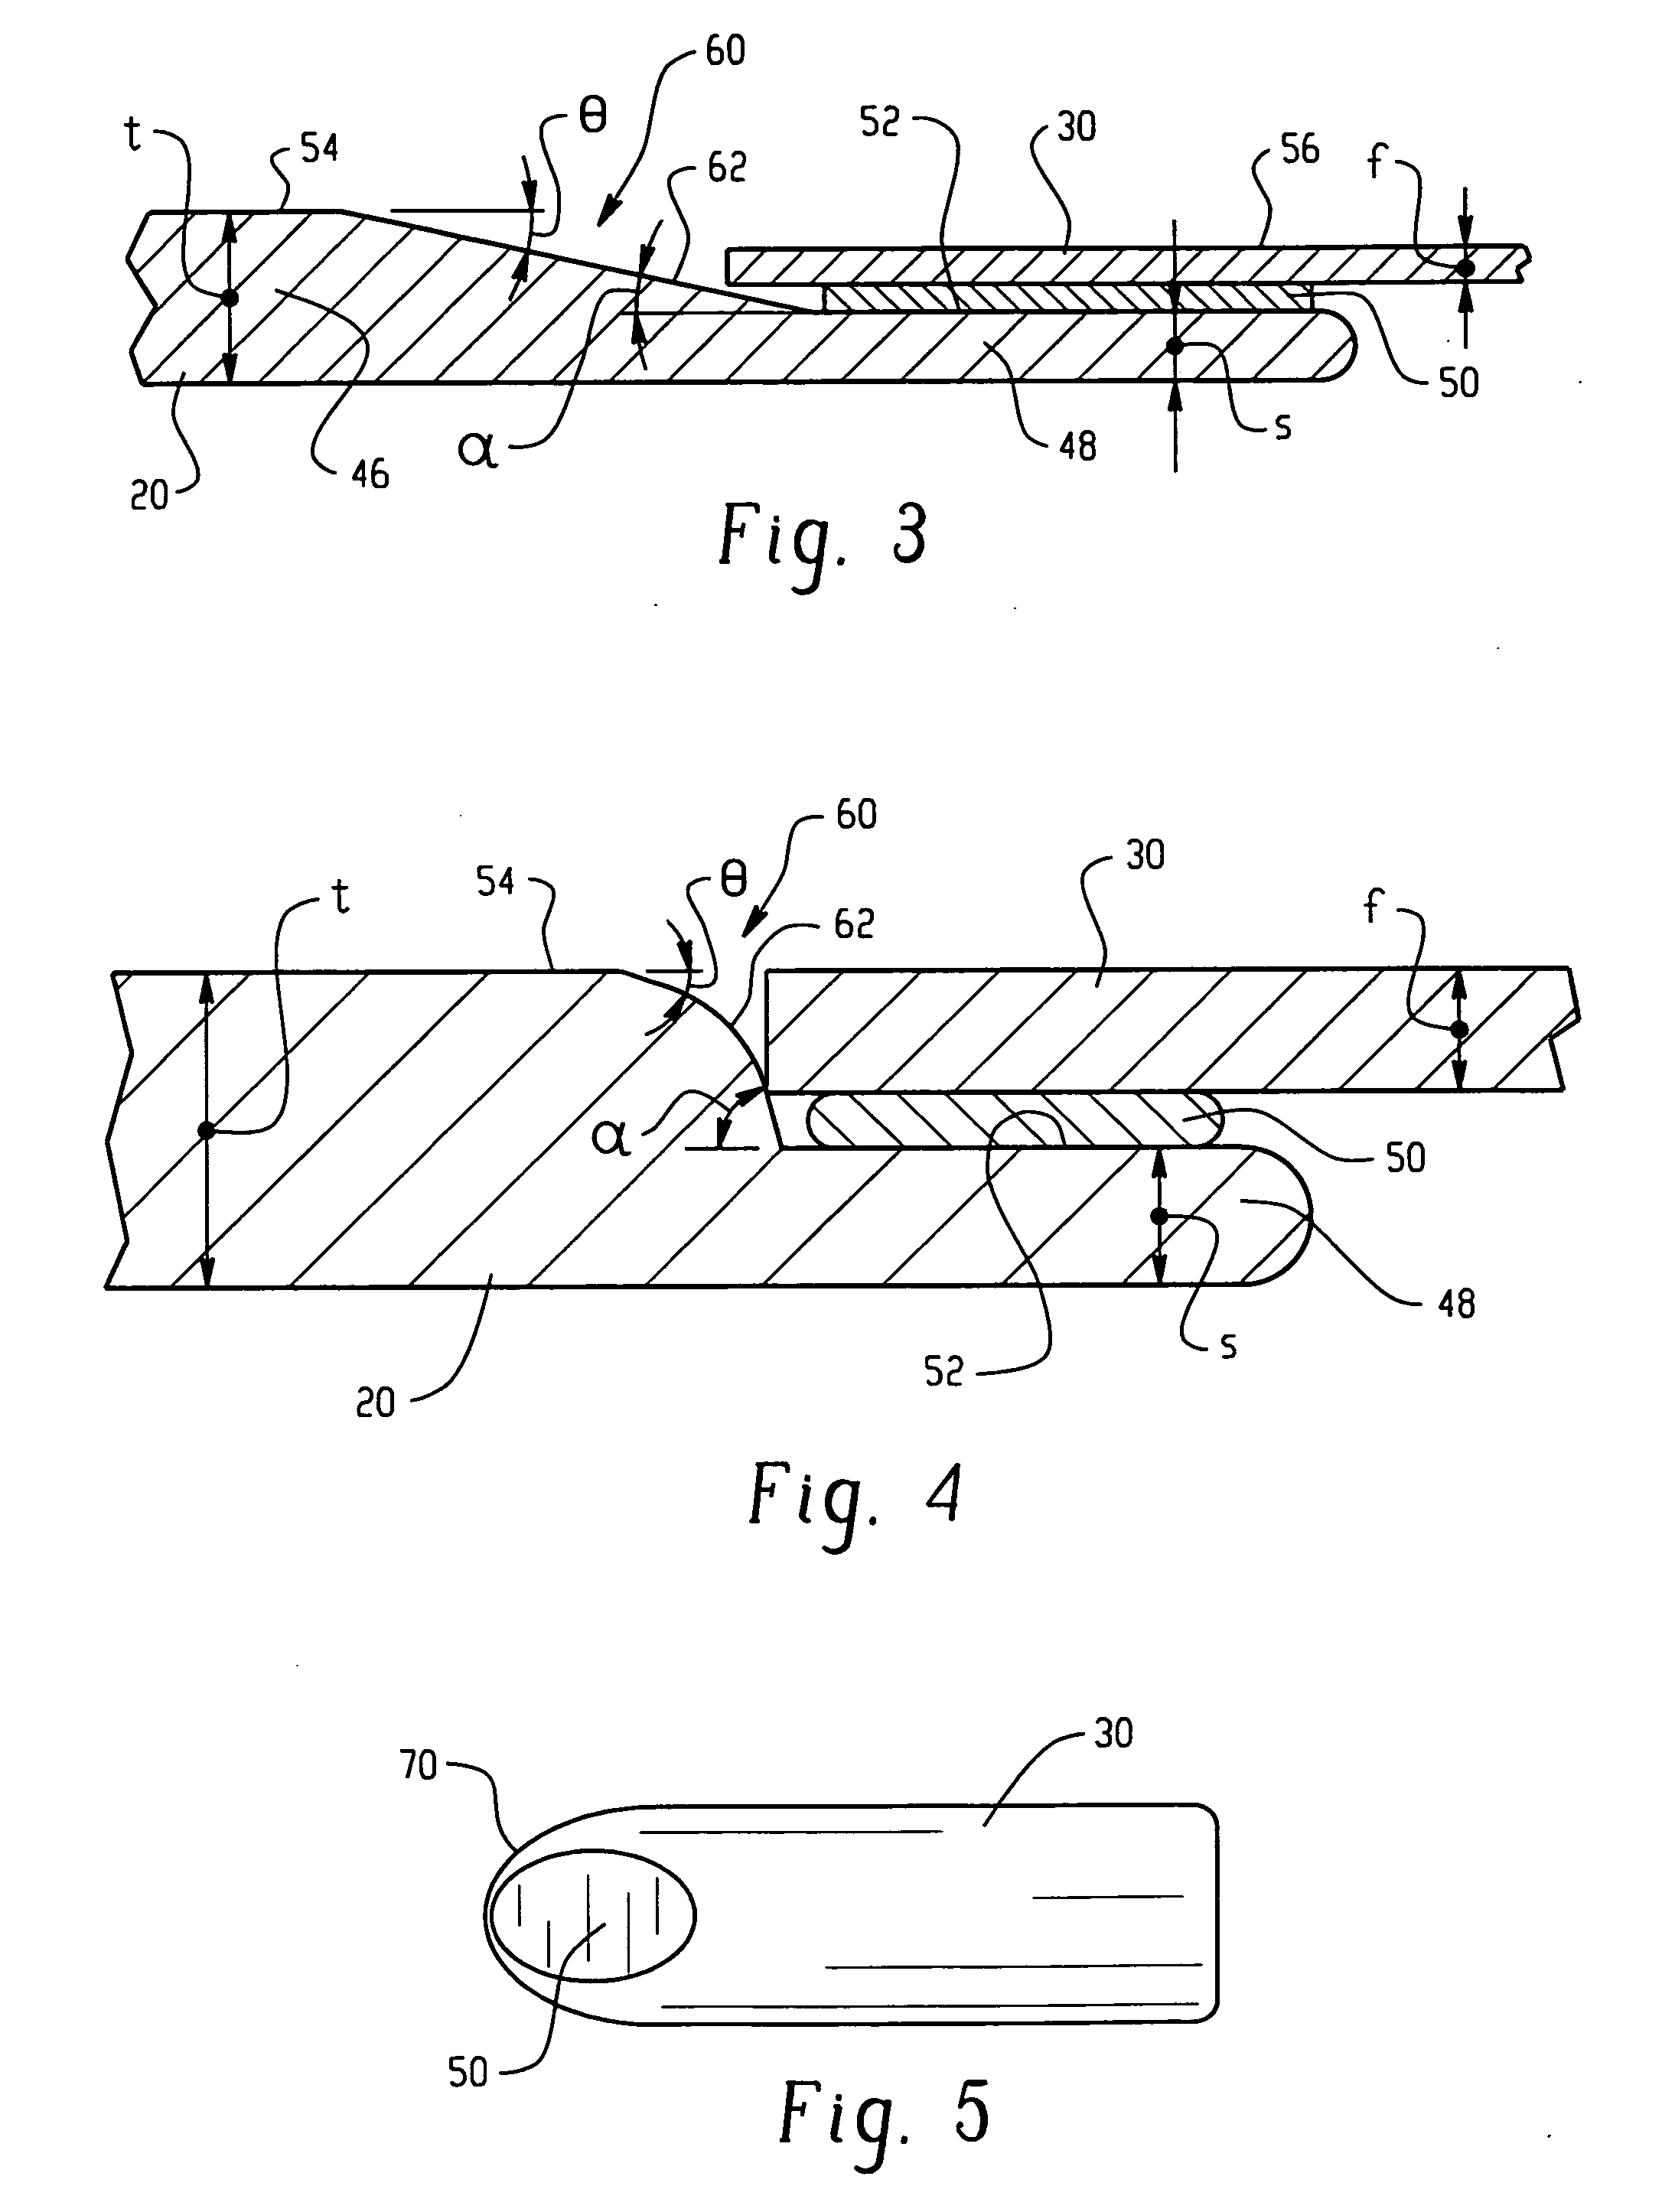 Electrode-foil interface structure